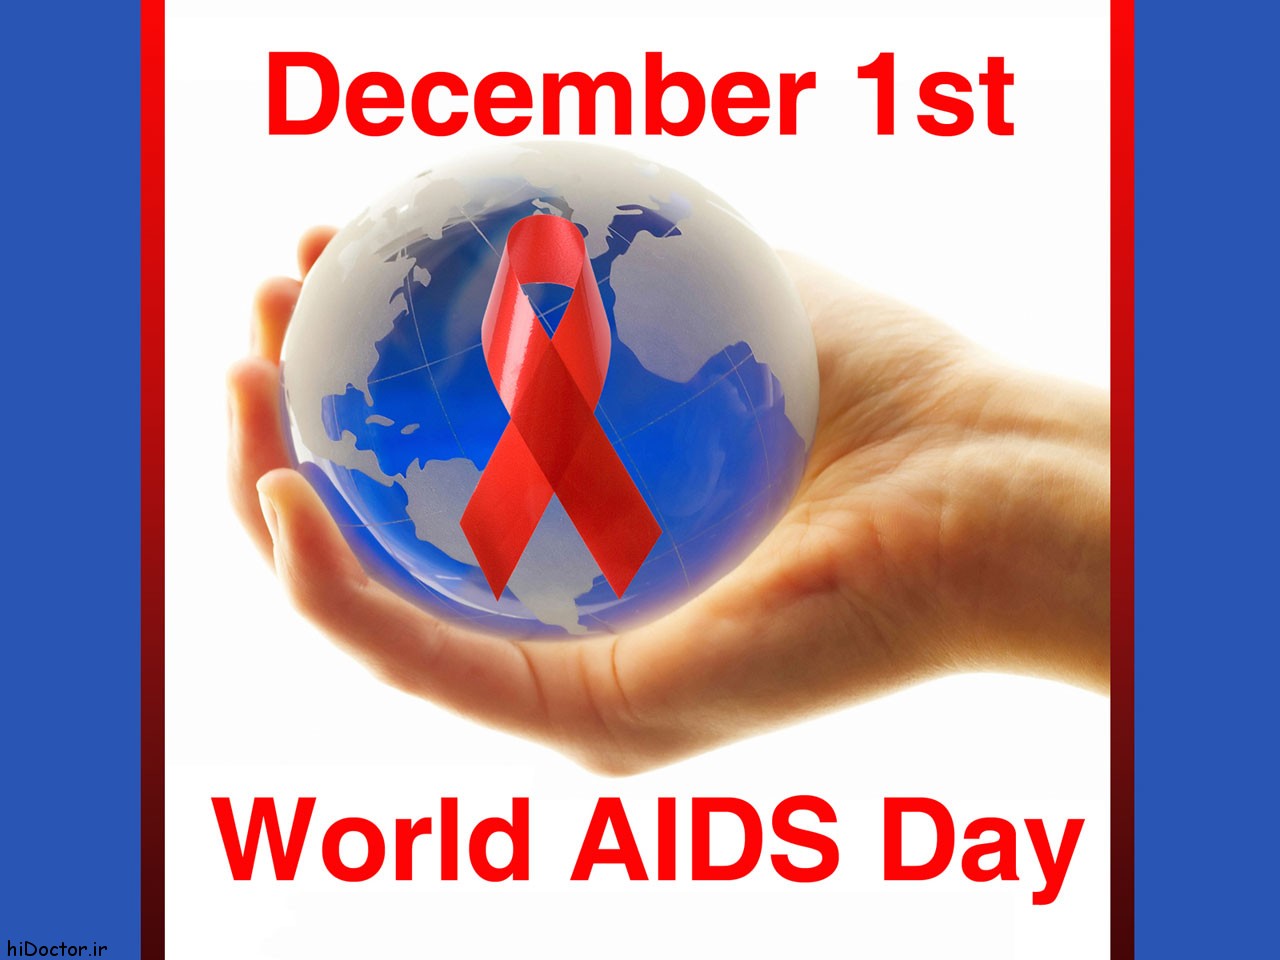 AIDS-HIV-photos (3)